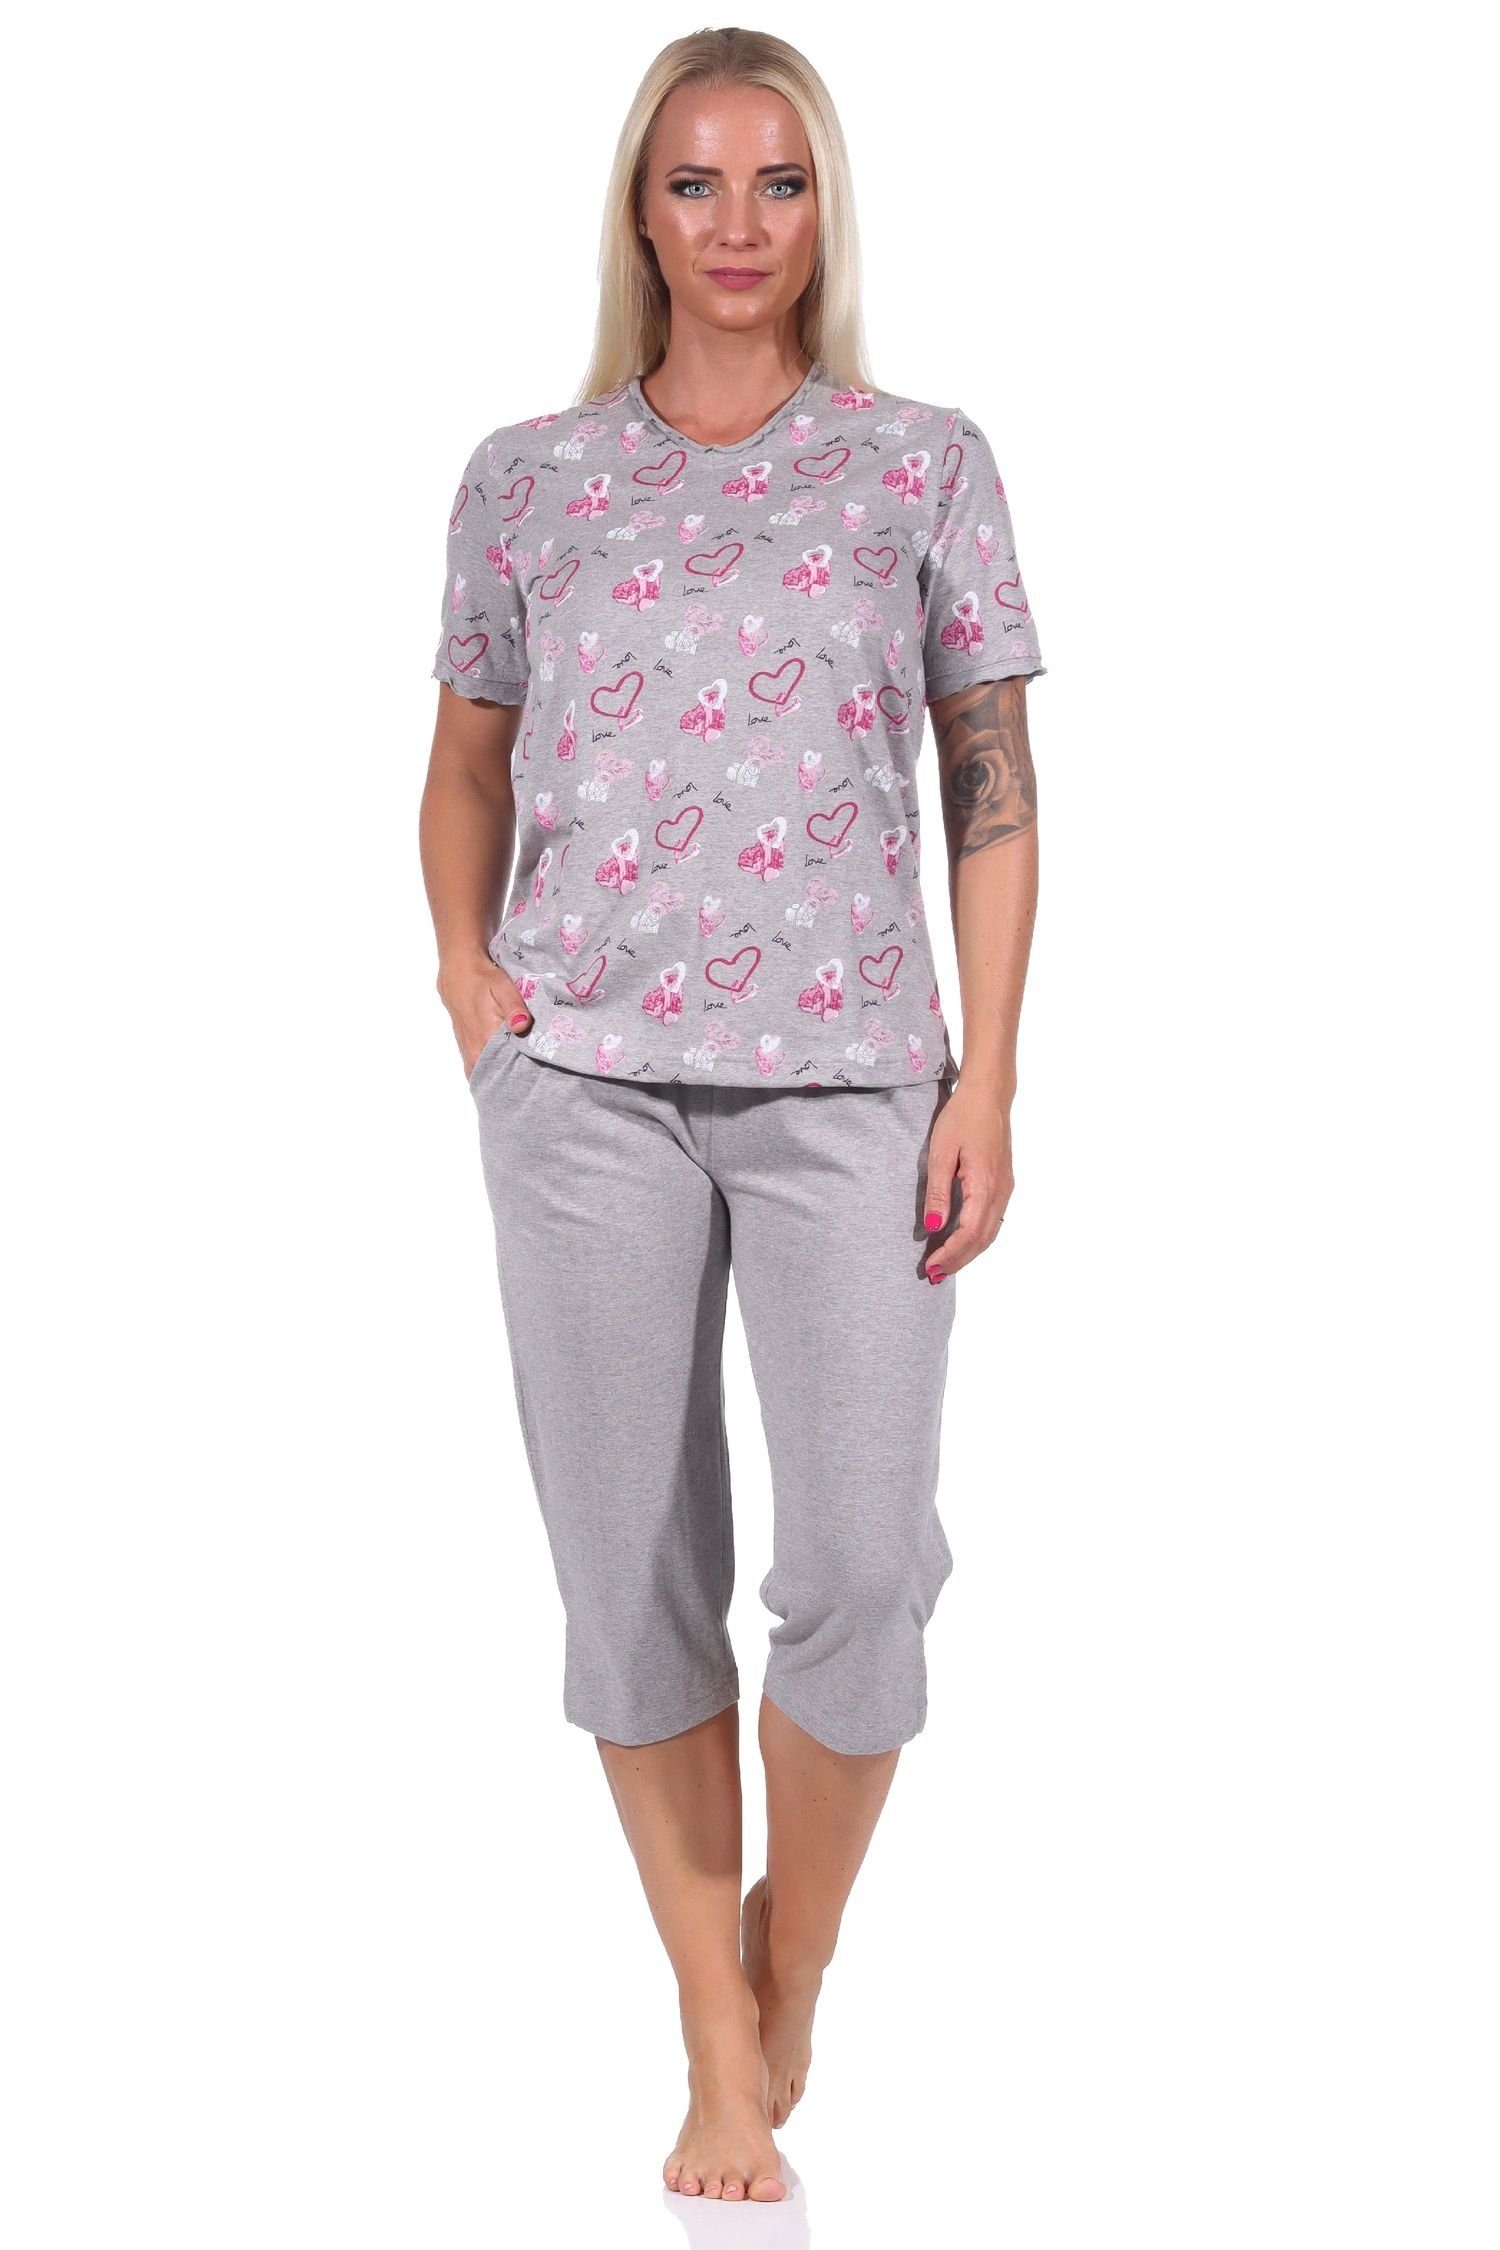 Übergrößen Pyjama grau-melange Herz Schlafanzug Capri in kurzarm auch - Damen Optik Normann in